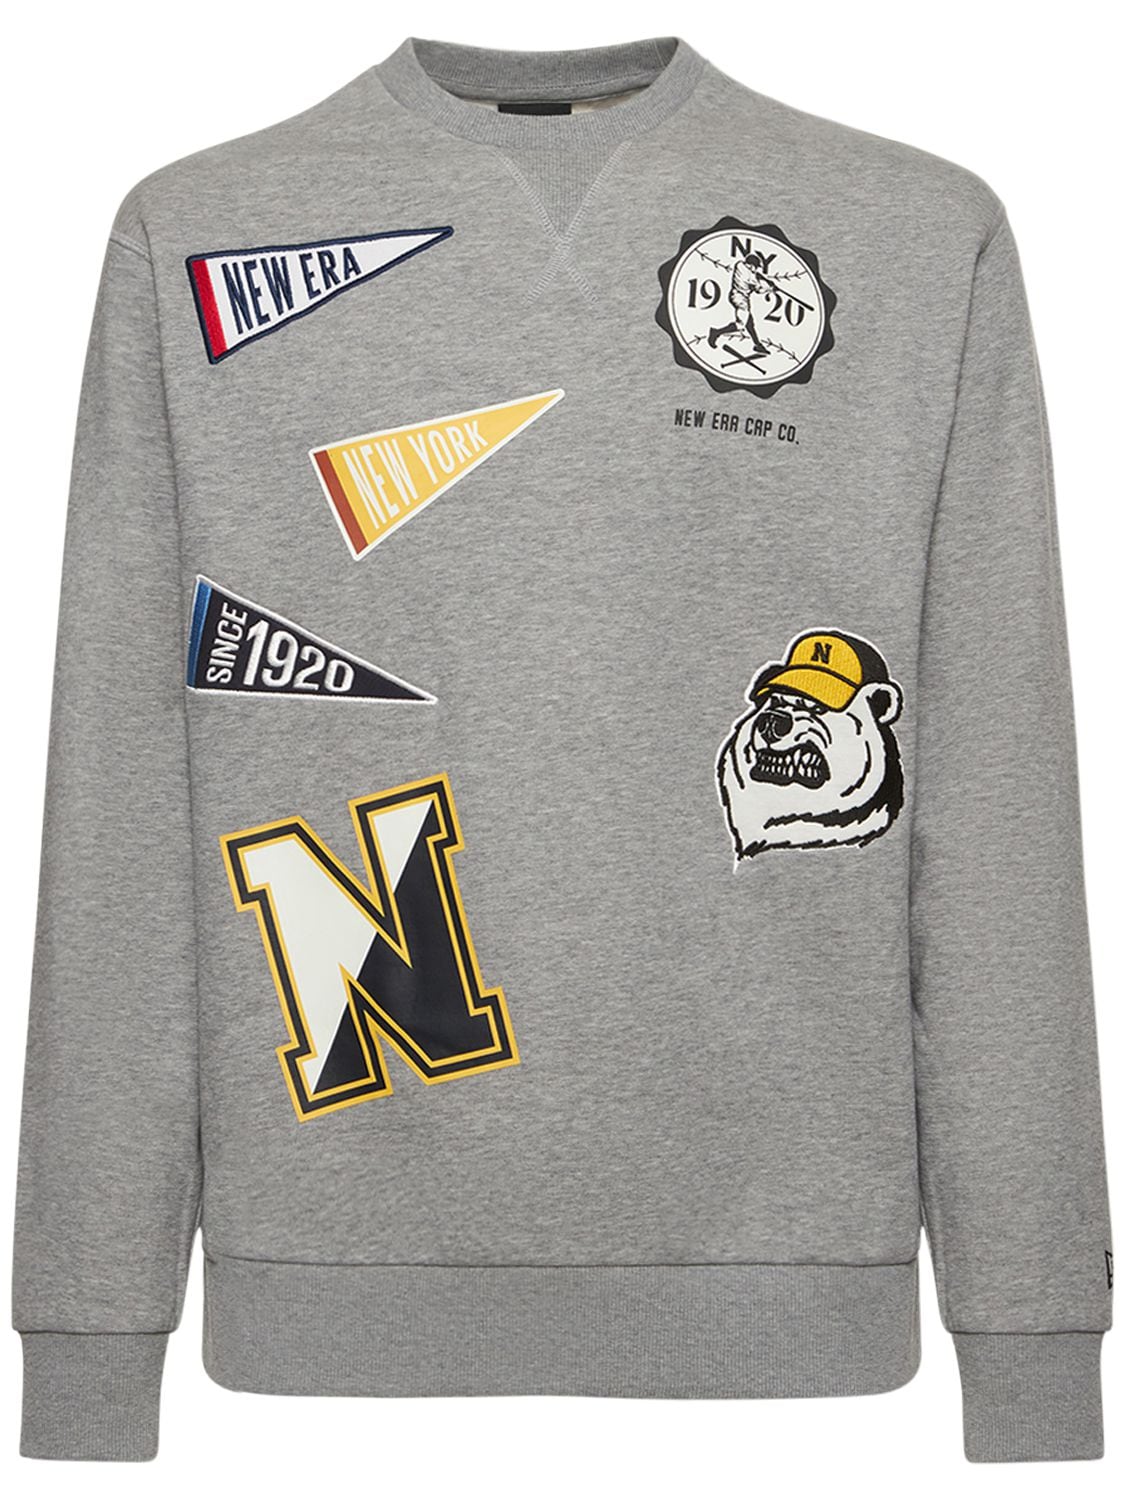 New York Yankees Heritage Grey Crew Neck Sweatshirt